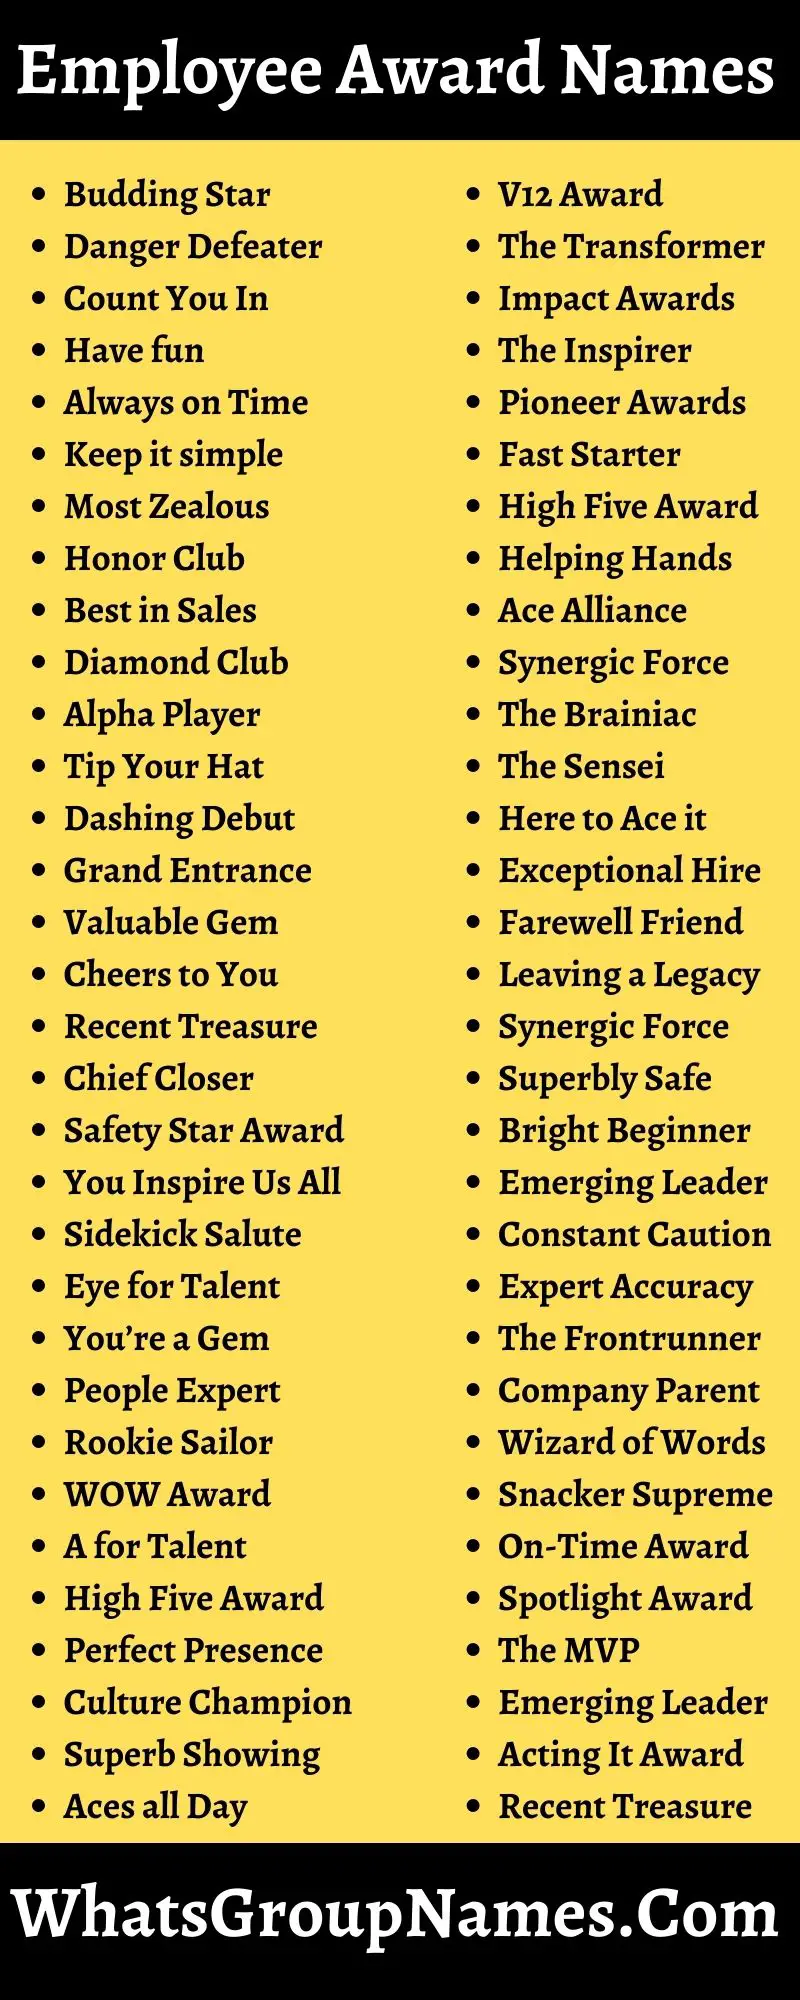 Employee Award Names